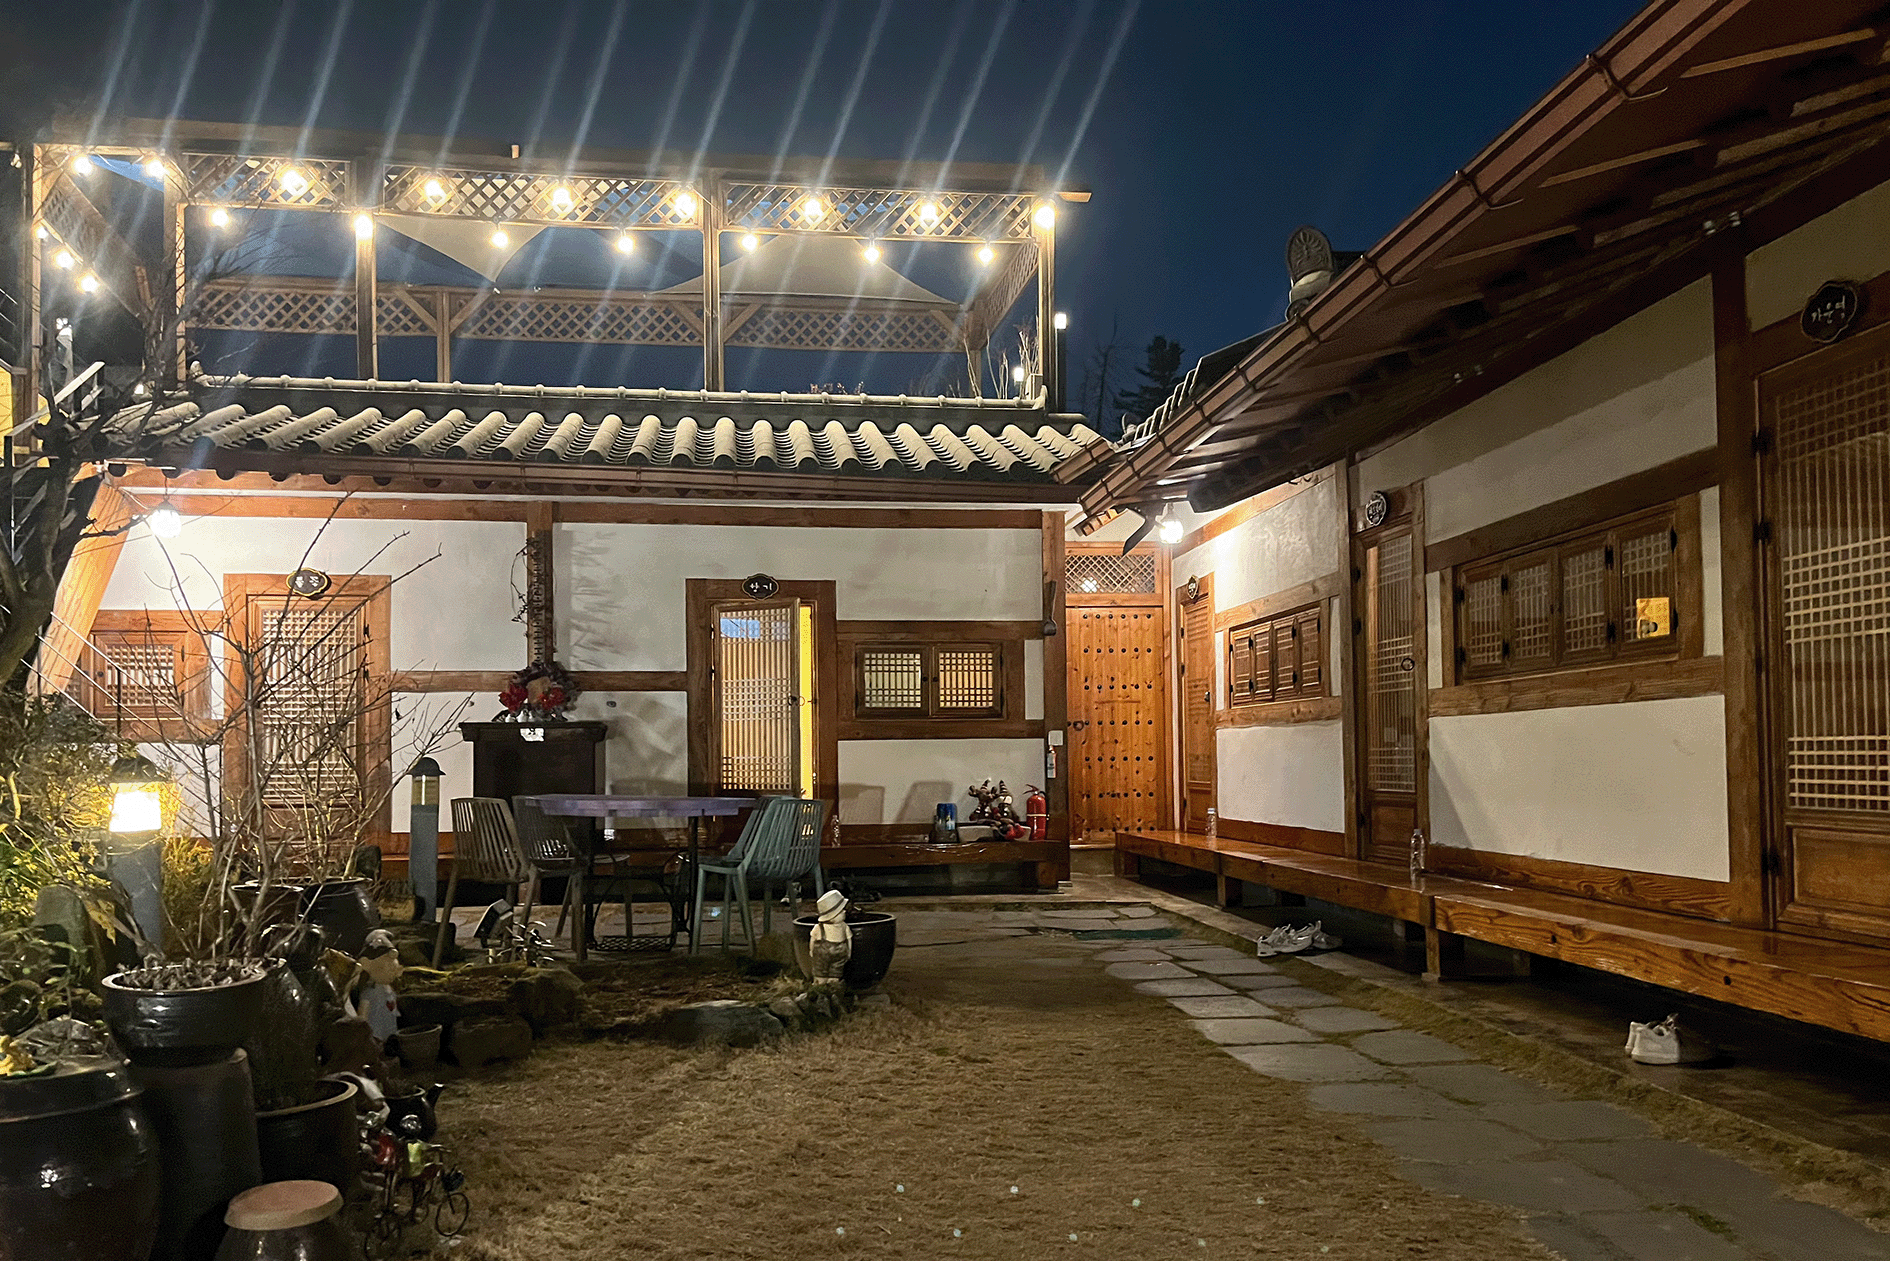 Traditional Korean hanok house at night with illuminated windows and outdoor sitting area